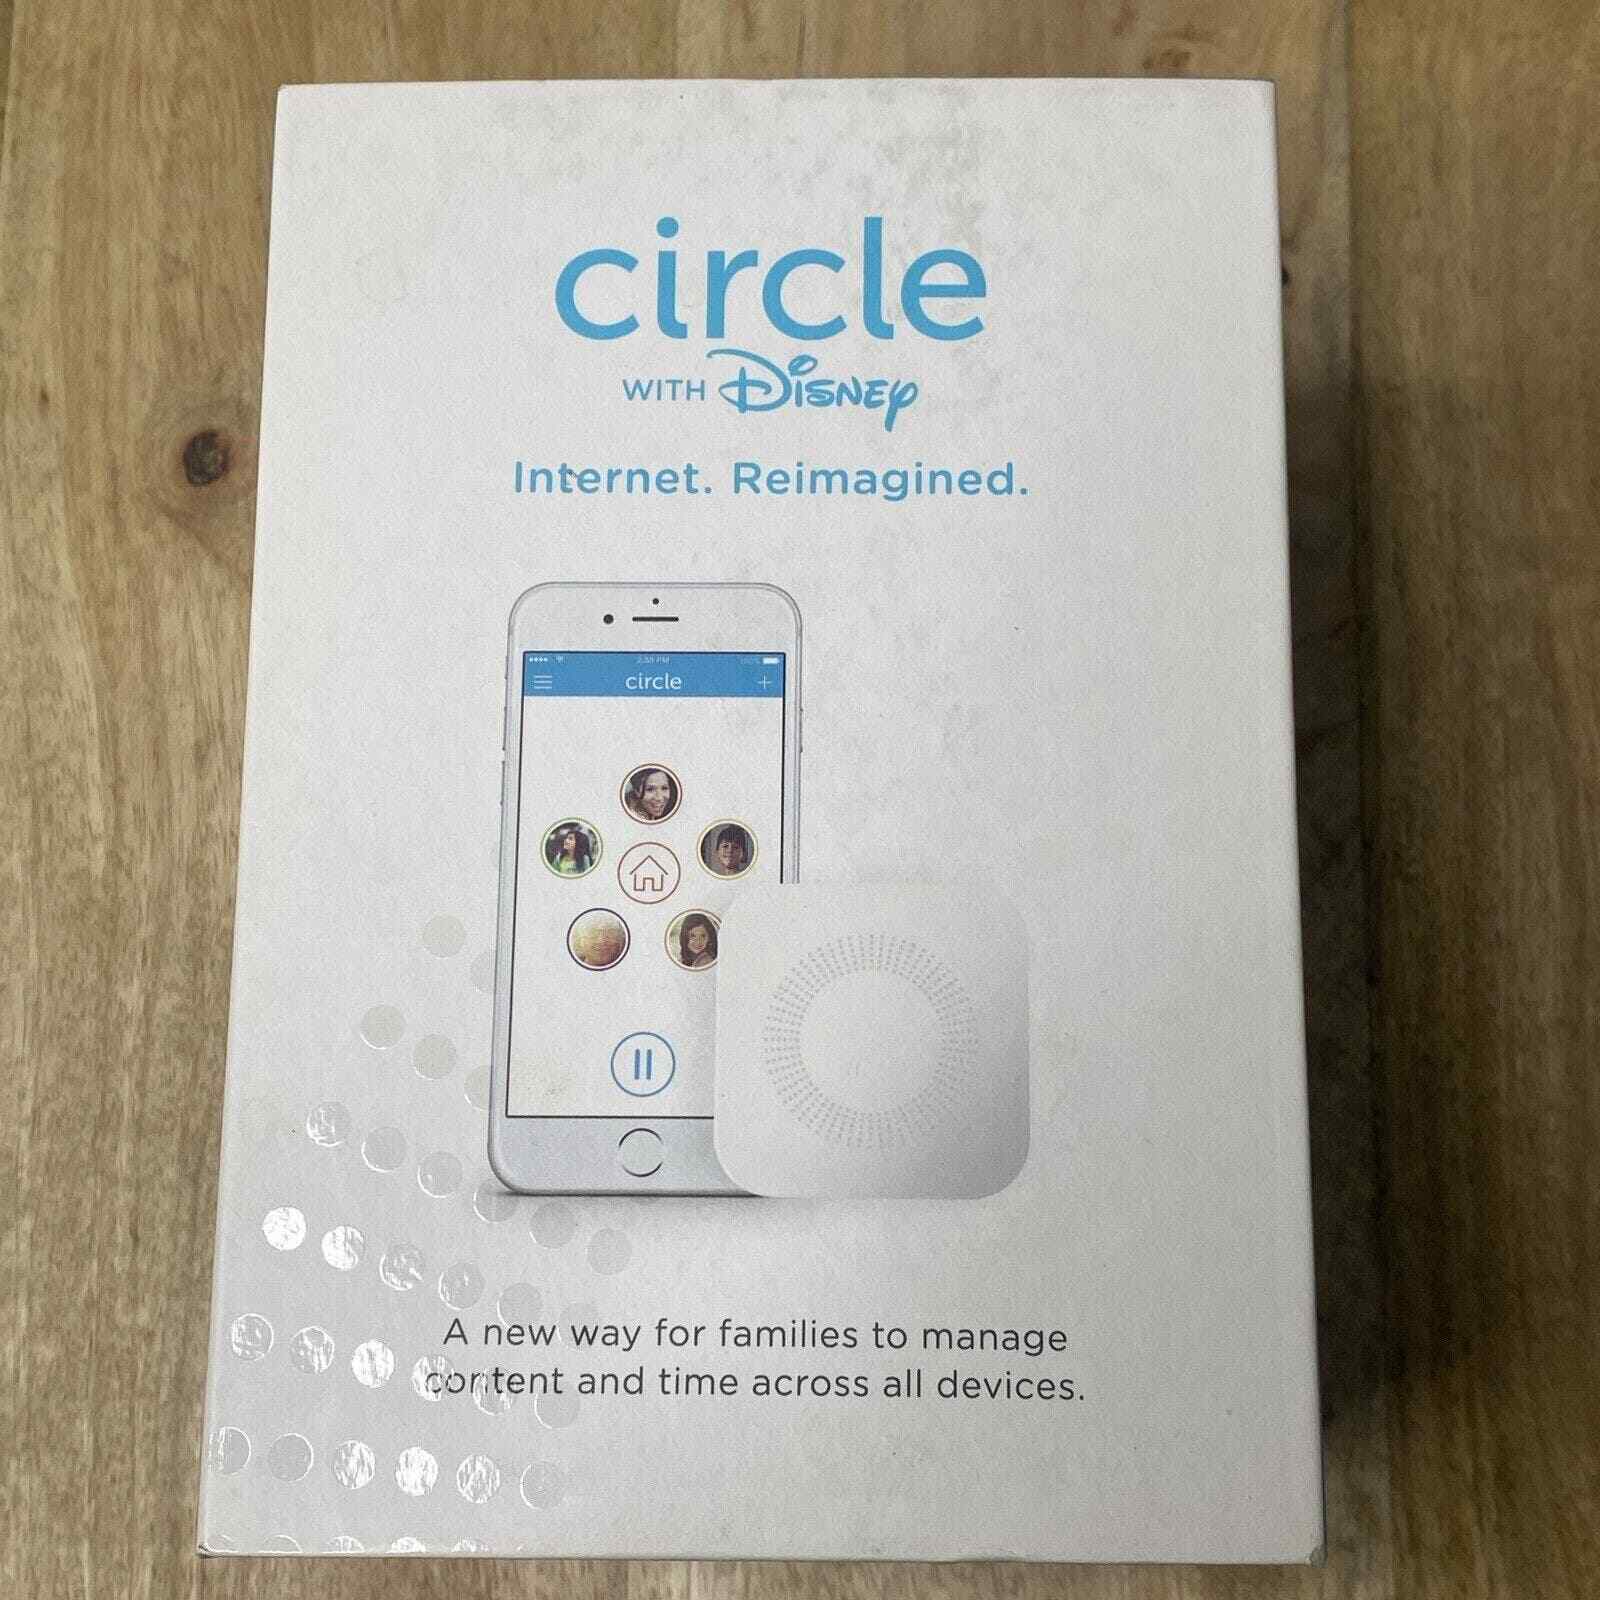 Circle with Disney Smart Wifi Internet Content Filter Parental Control Hardware